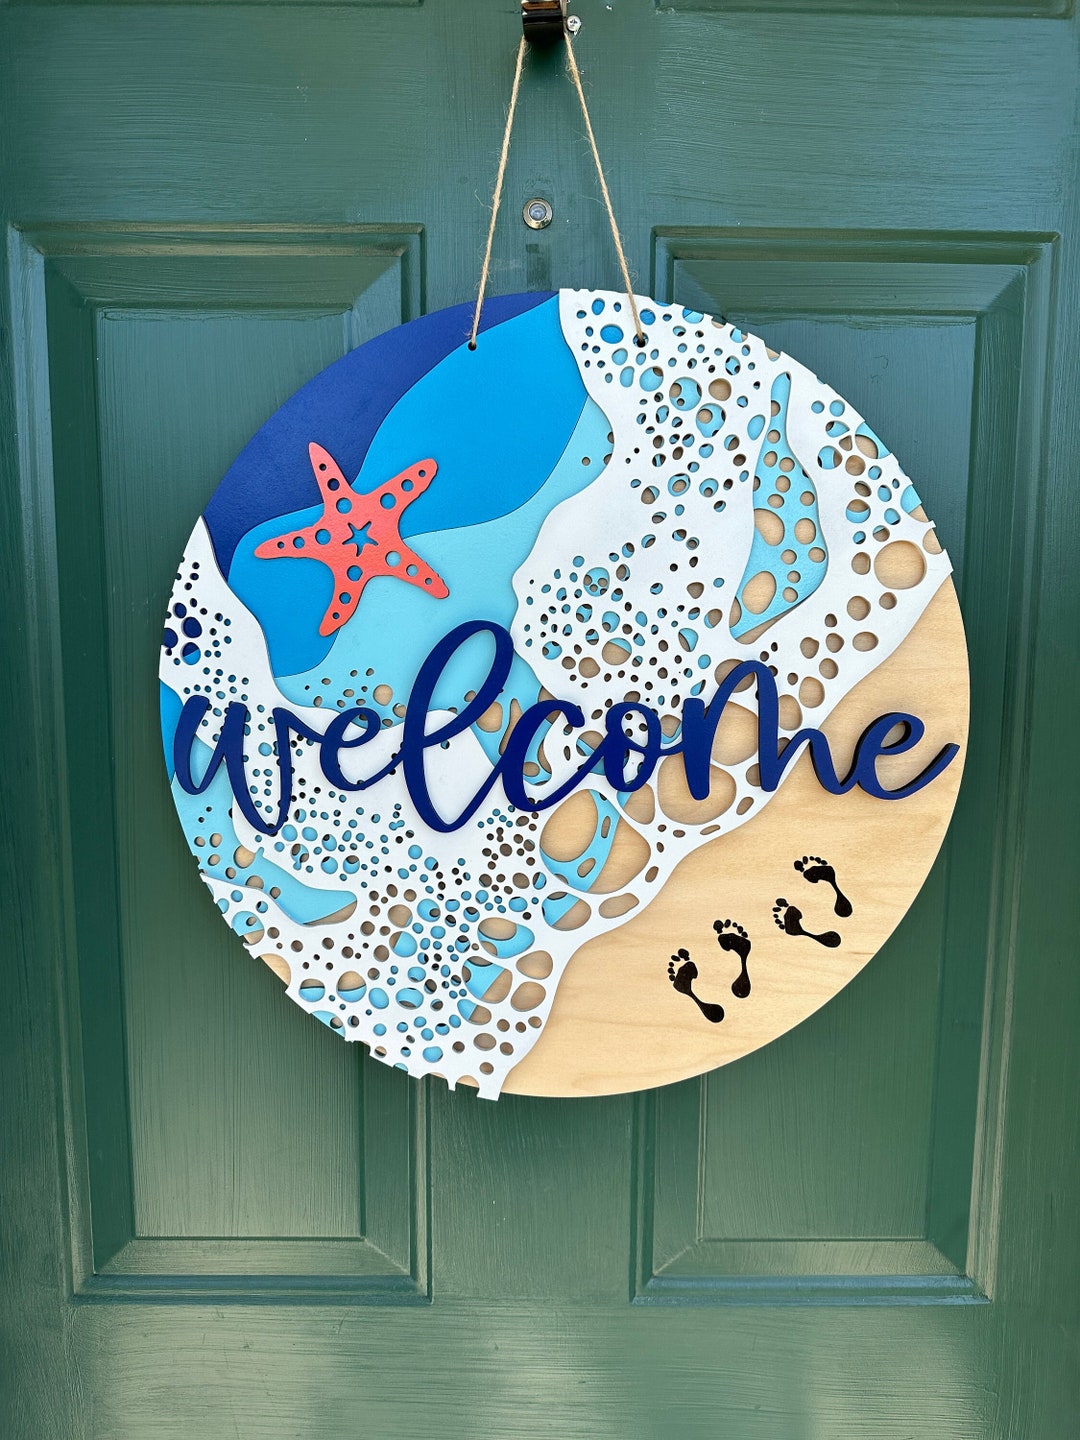 BAGGUCOR 2mx1m Modern Nautical Decorative Fishing Net Seaside Beach Shell Party Door Wall Decor Home Decoration, Blue